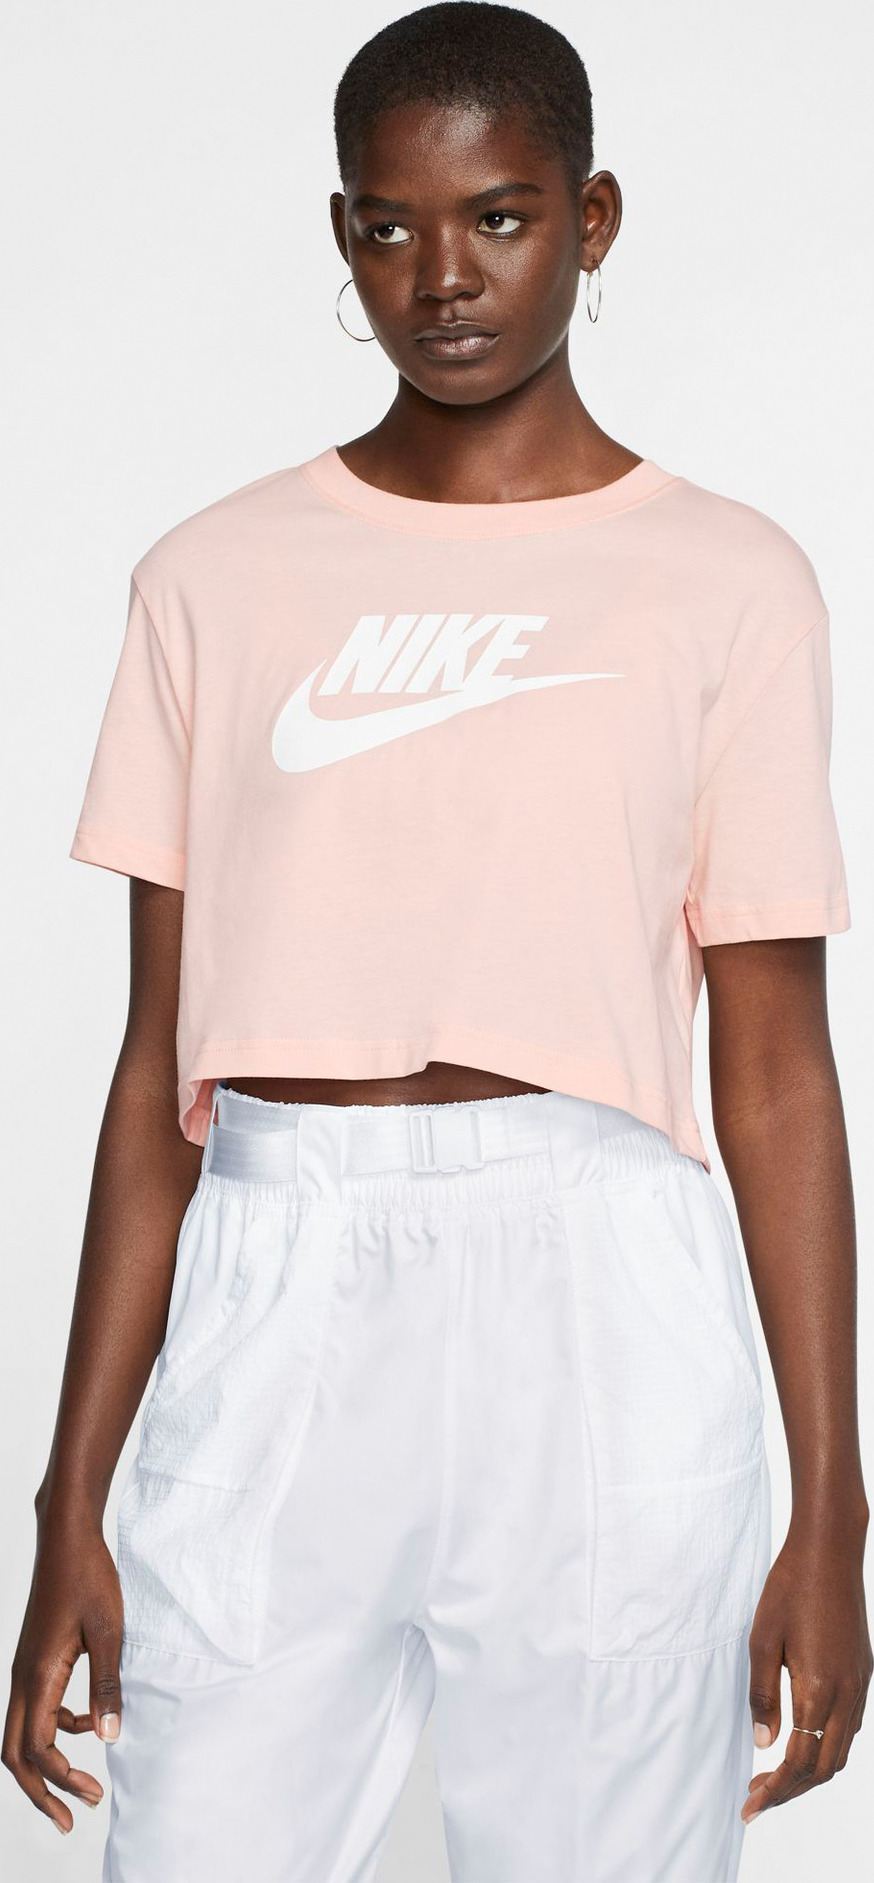 Essential Crop top Nike Růžová Nike